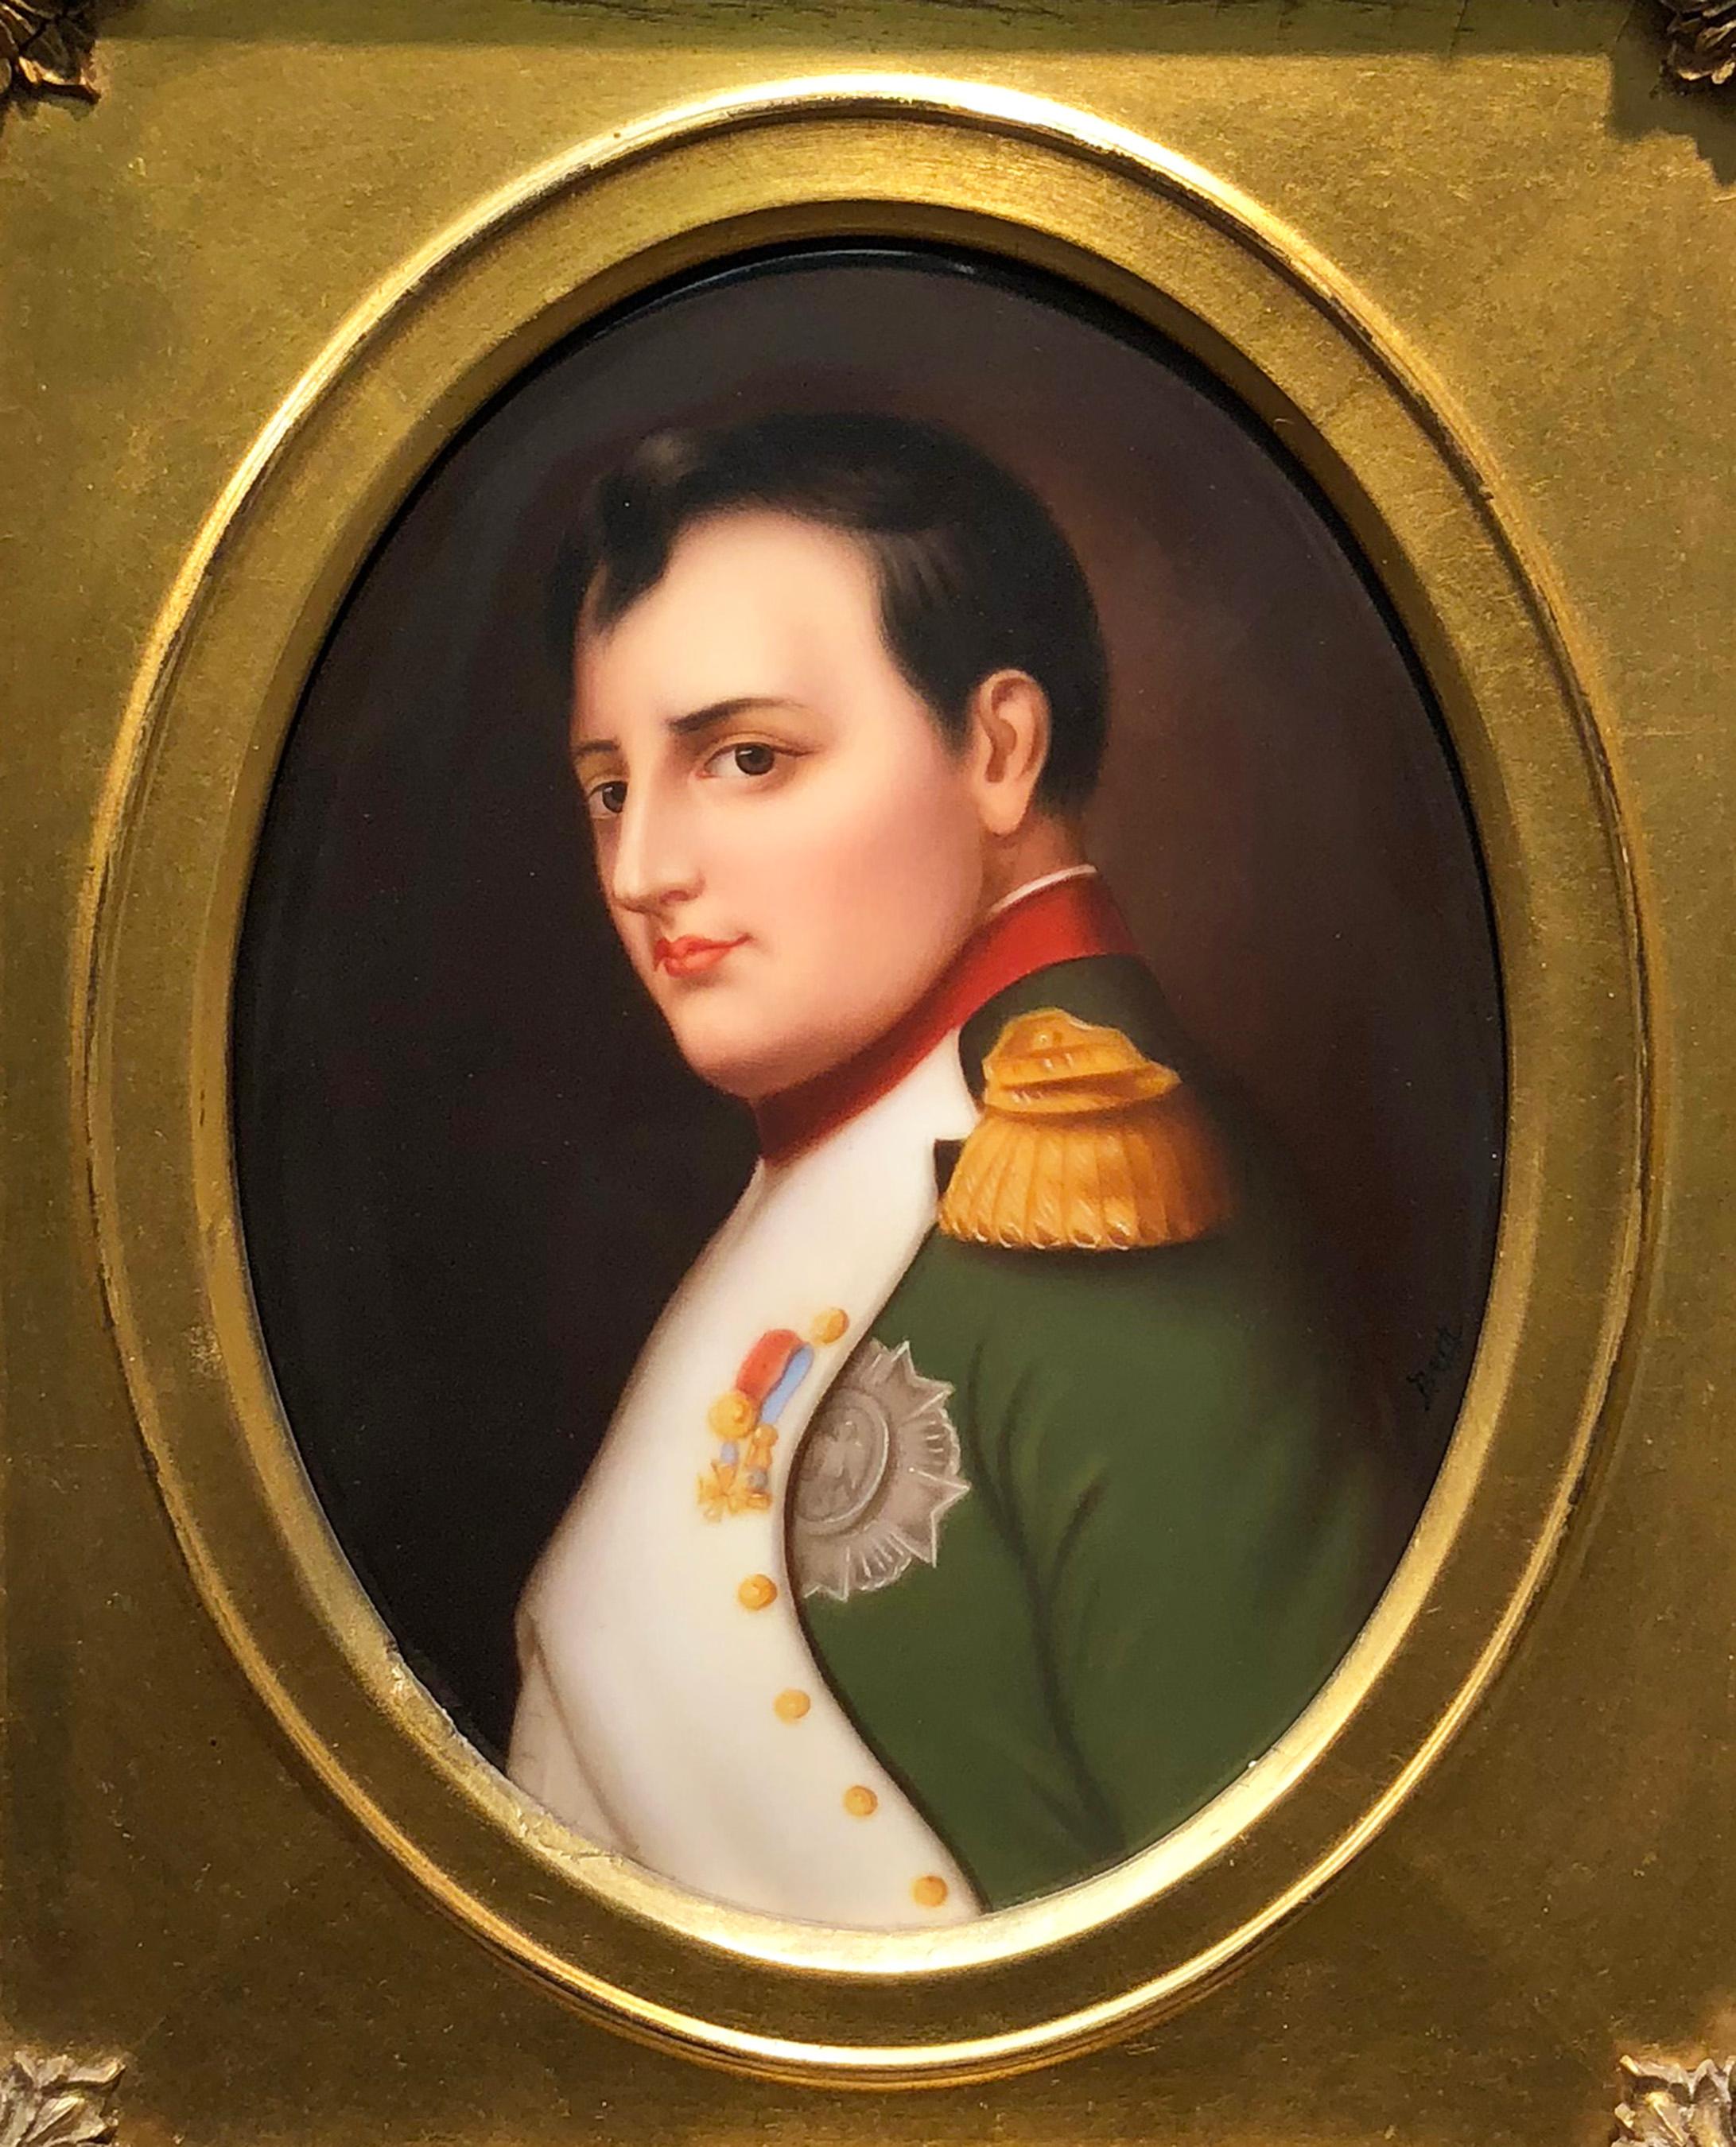 Napoleon - Painting by Königliche Porzellan-Manufaktur (KPM)